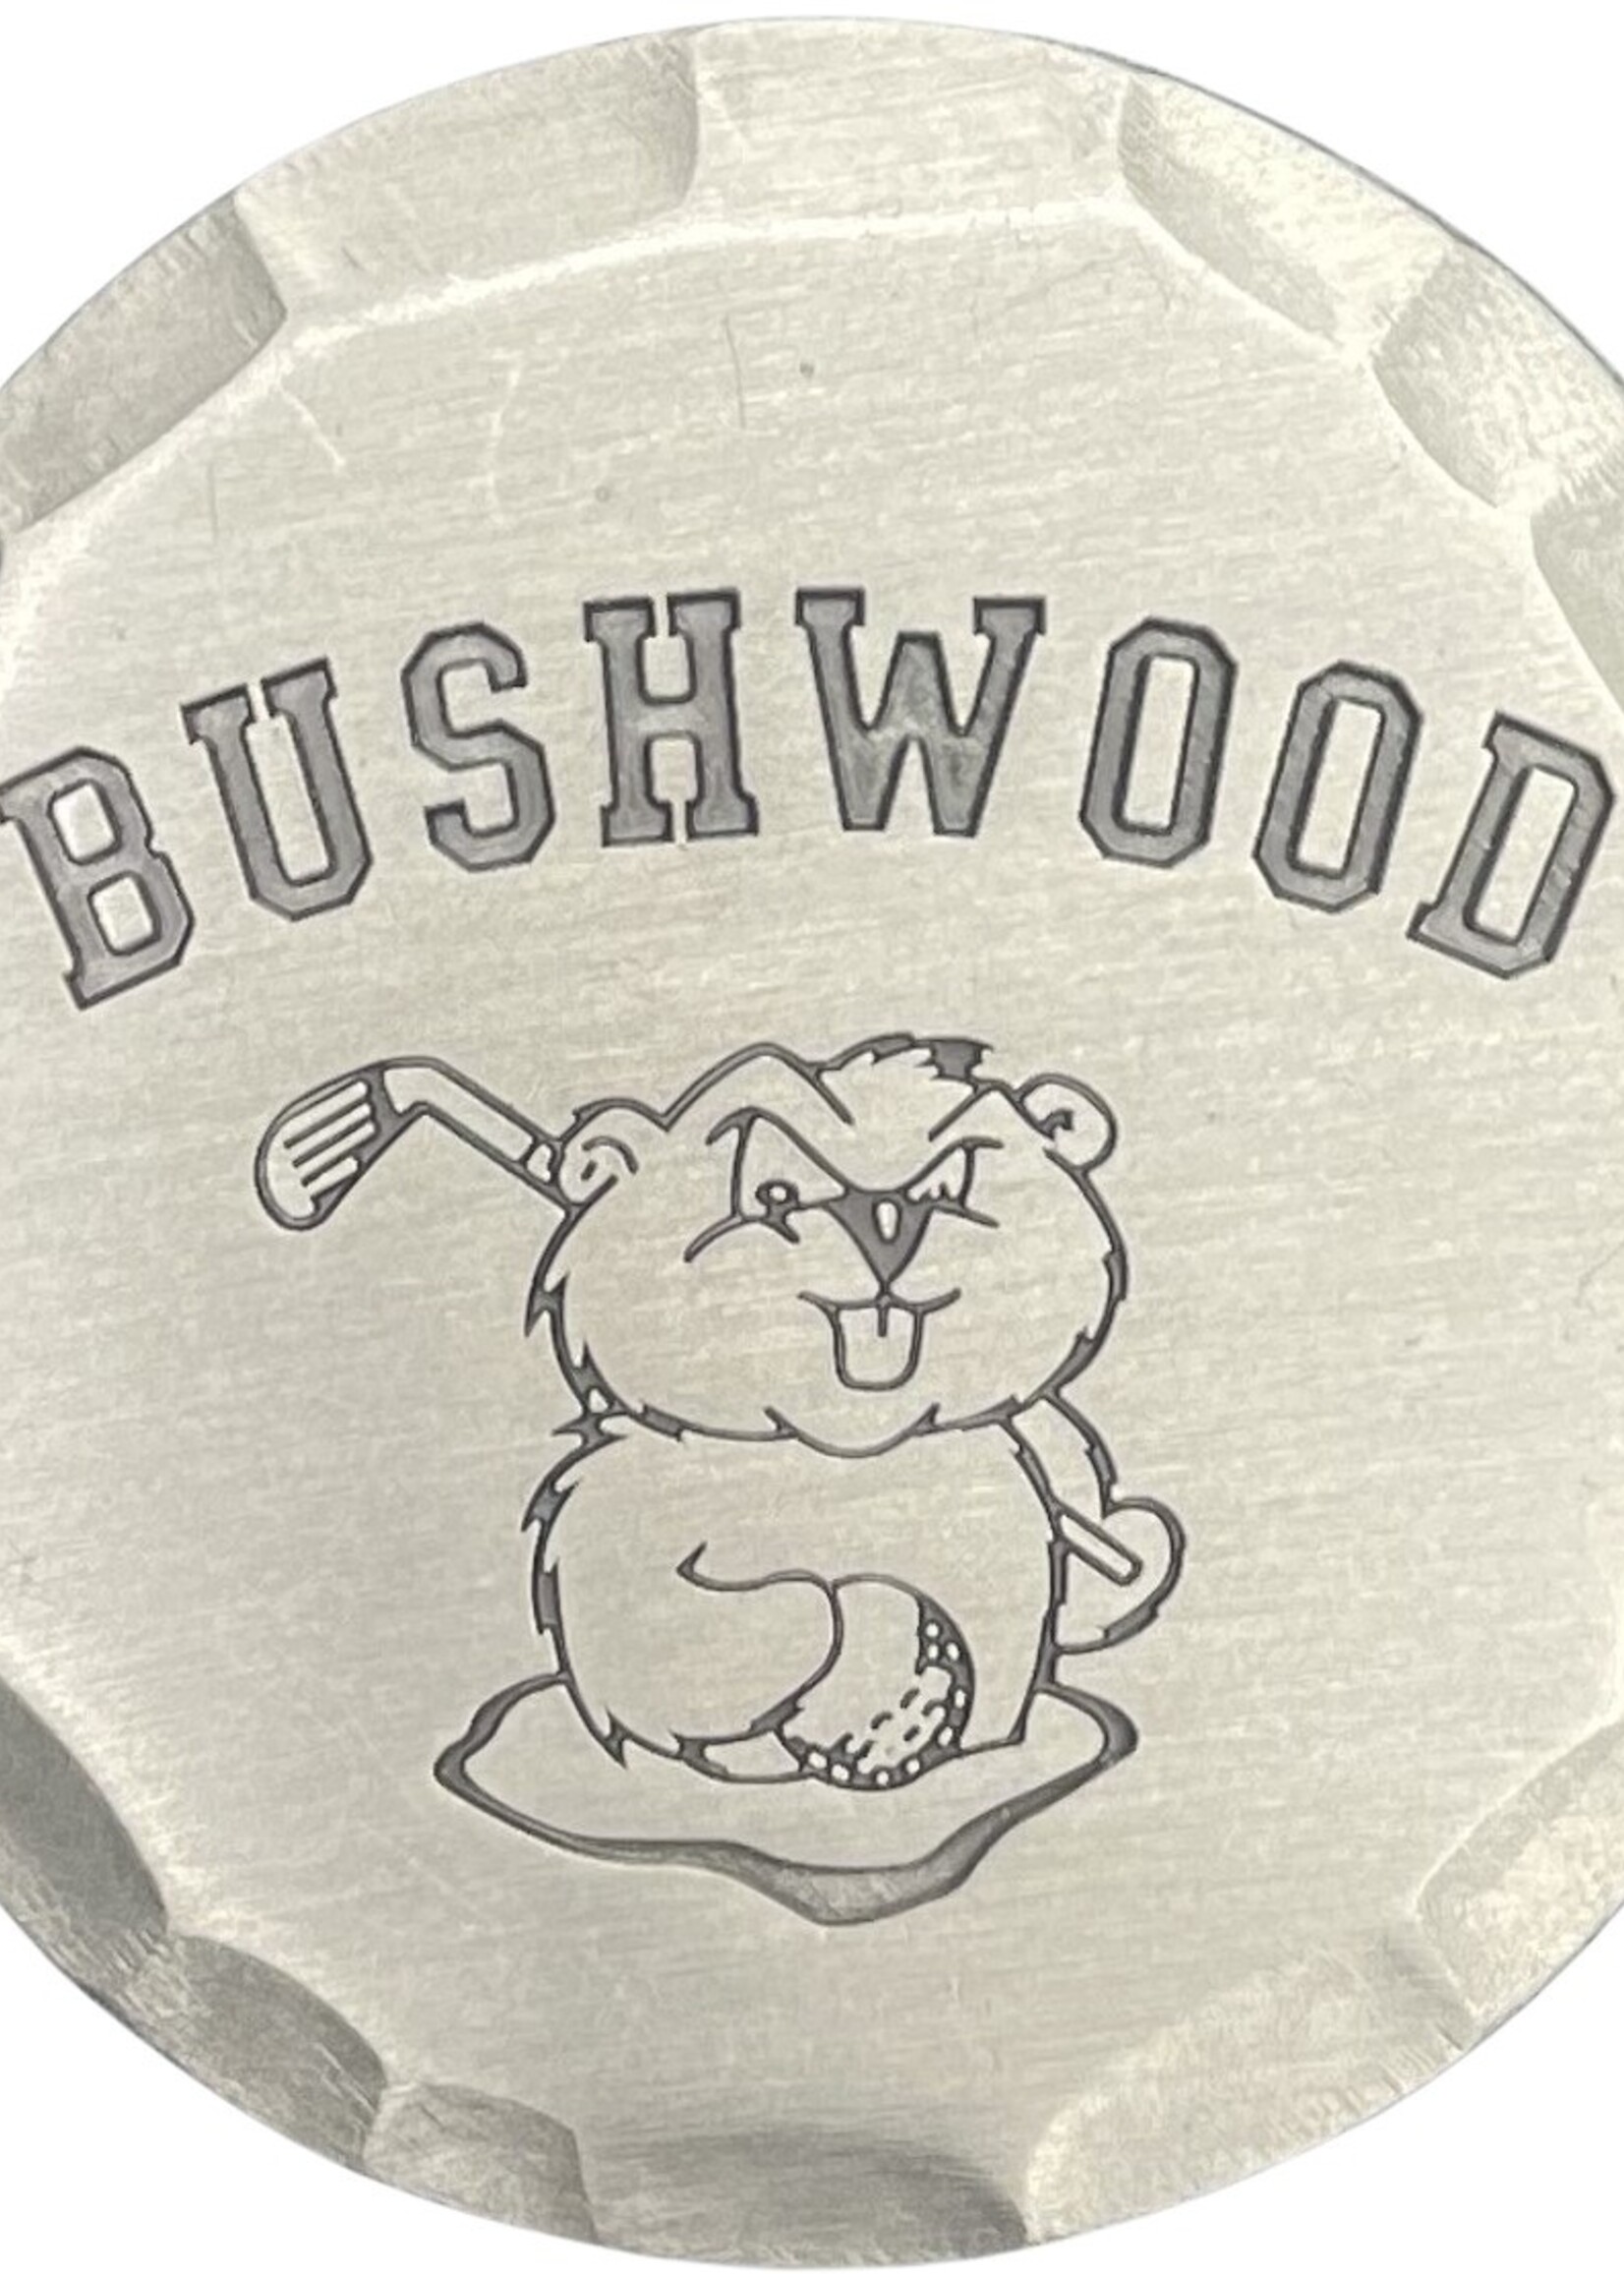 Bushwood Bushwood Ball Marker- Silver